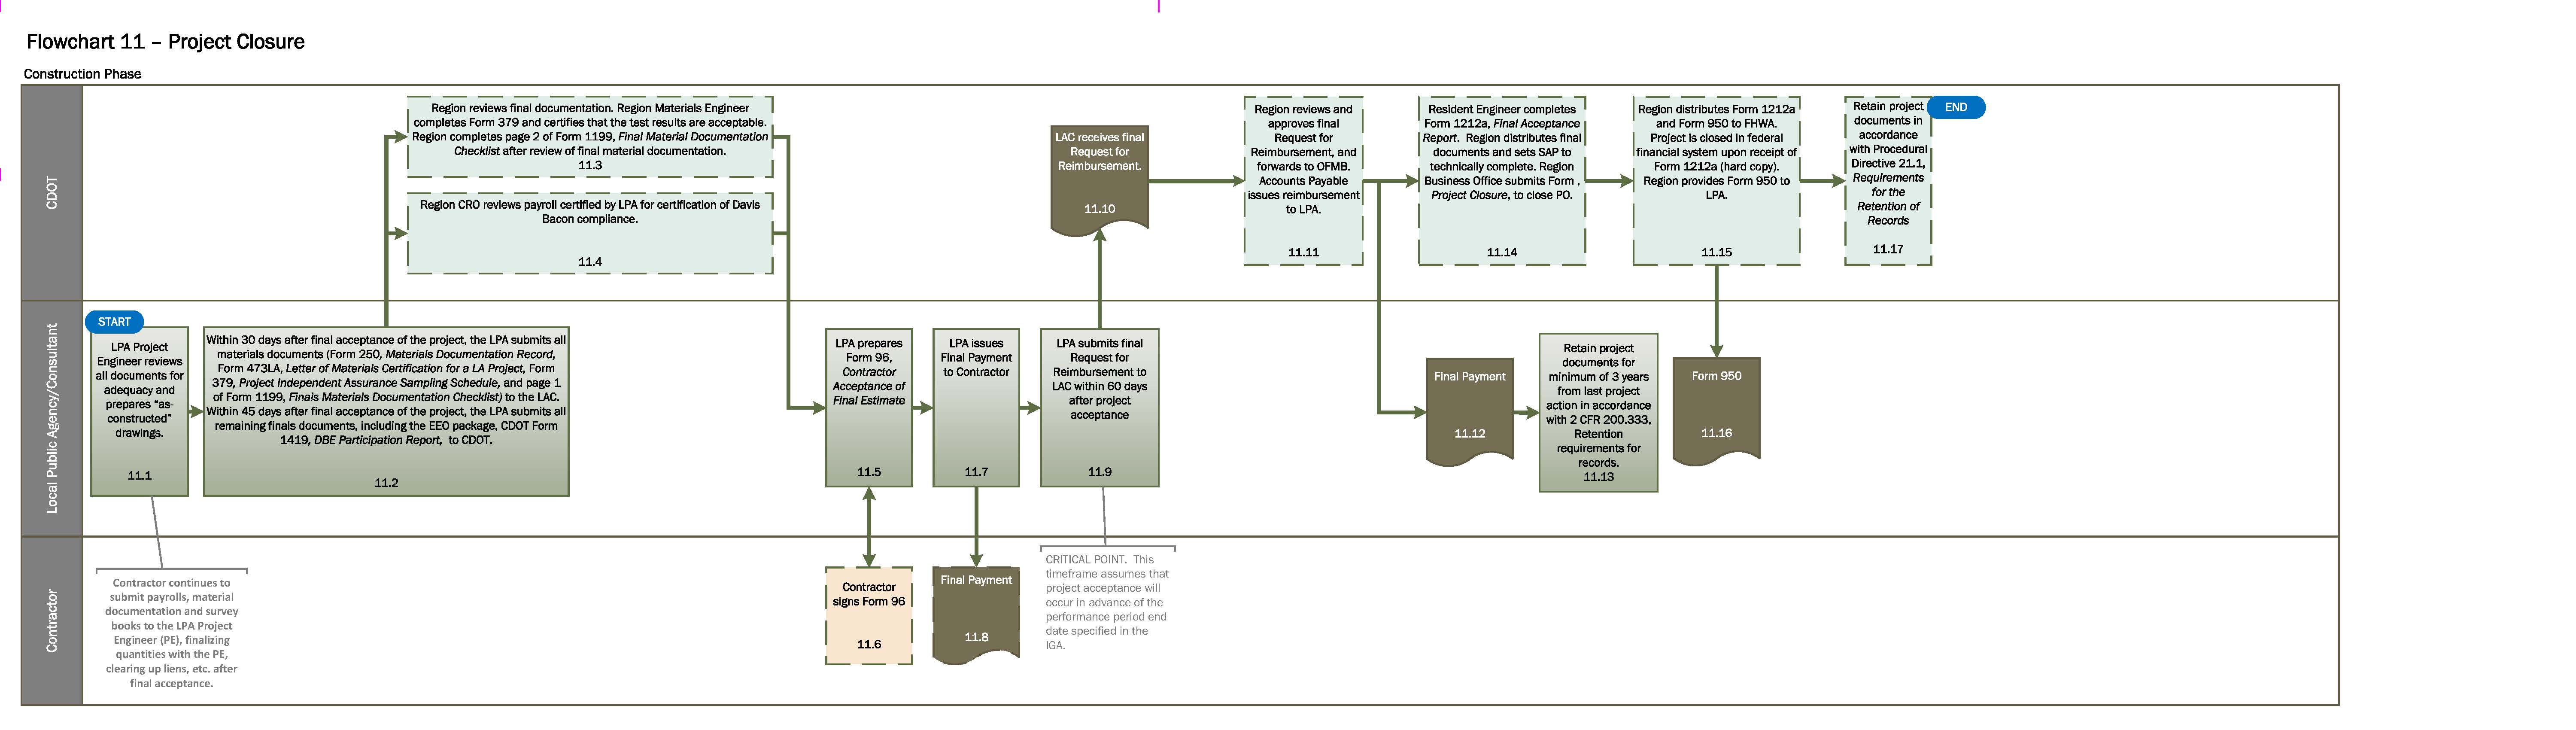 Federal Bill Process Flow Chart